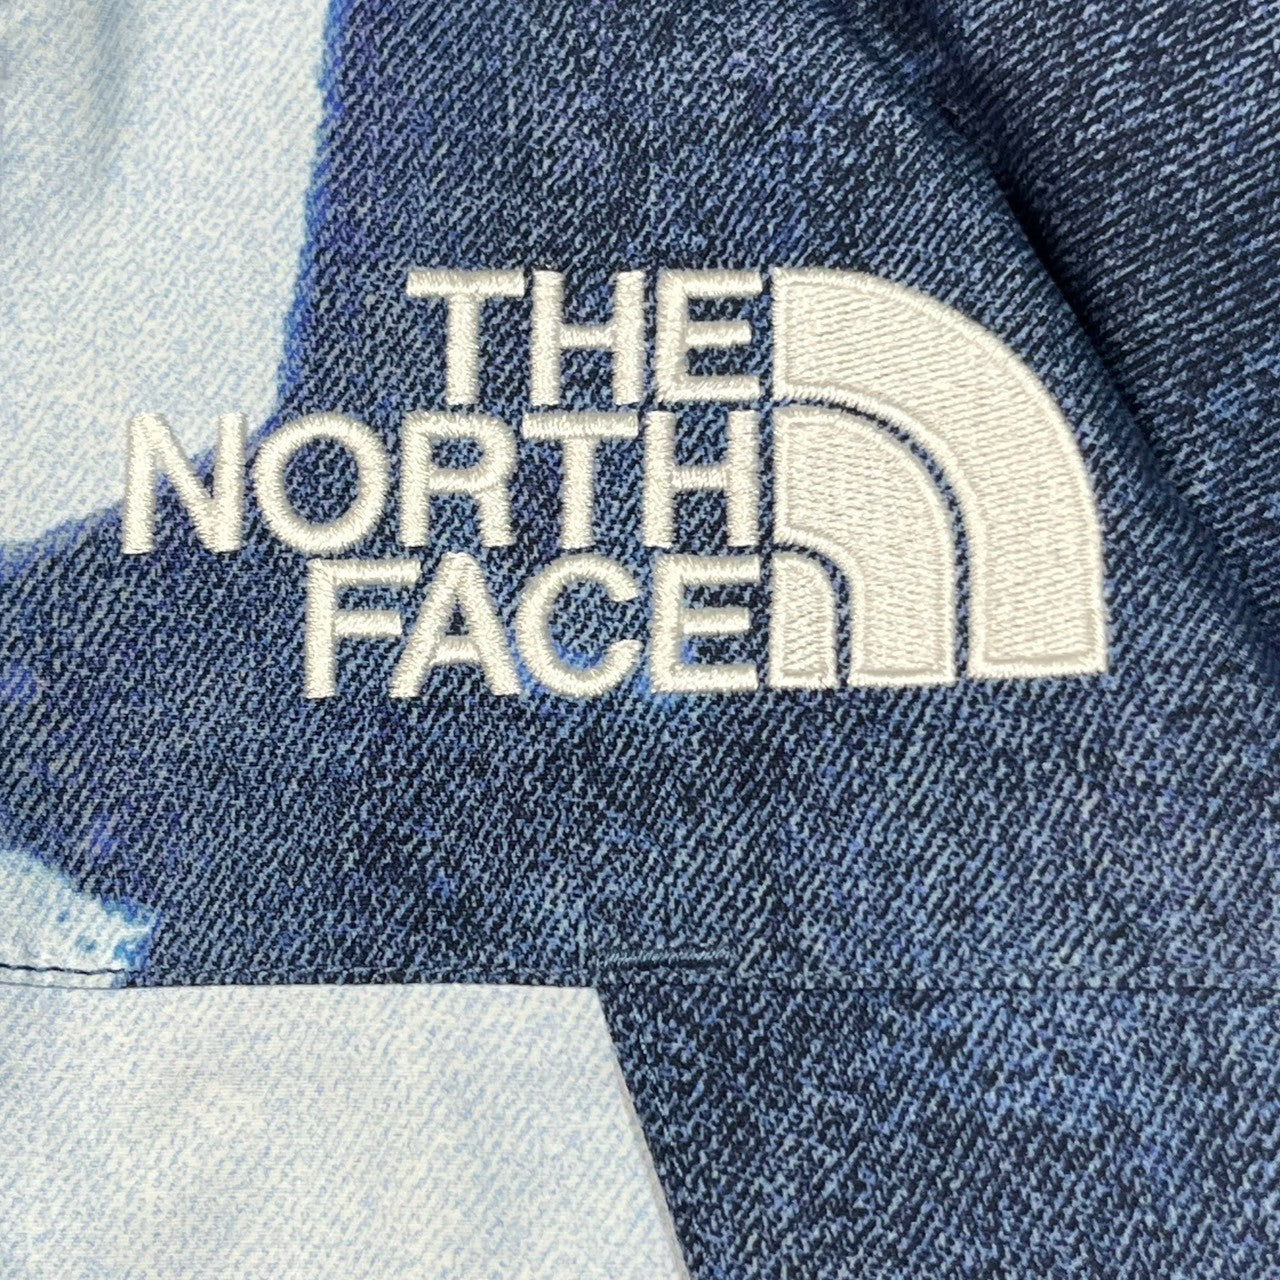 SUPREME×THE NORTH FACE(シュプリーム×ザノースフェイス) 21AW Bleached Denim Print Mountain Jacket ブリーチド デニム マウンテン ジャケット マウンテンパーカー NP52100I S スカイブルー